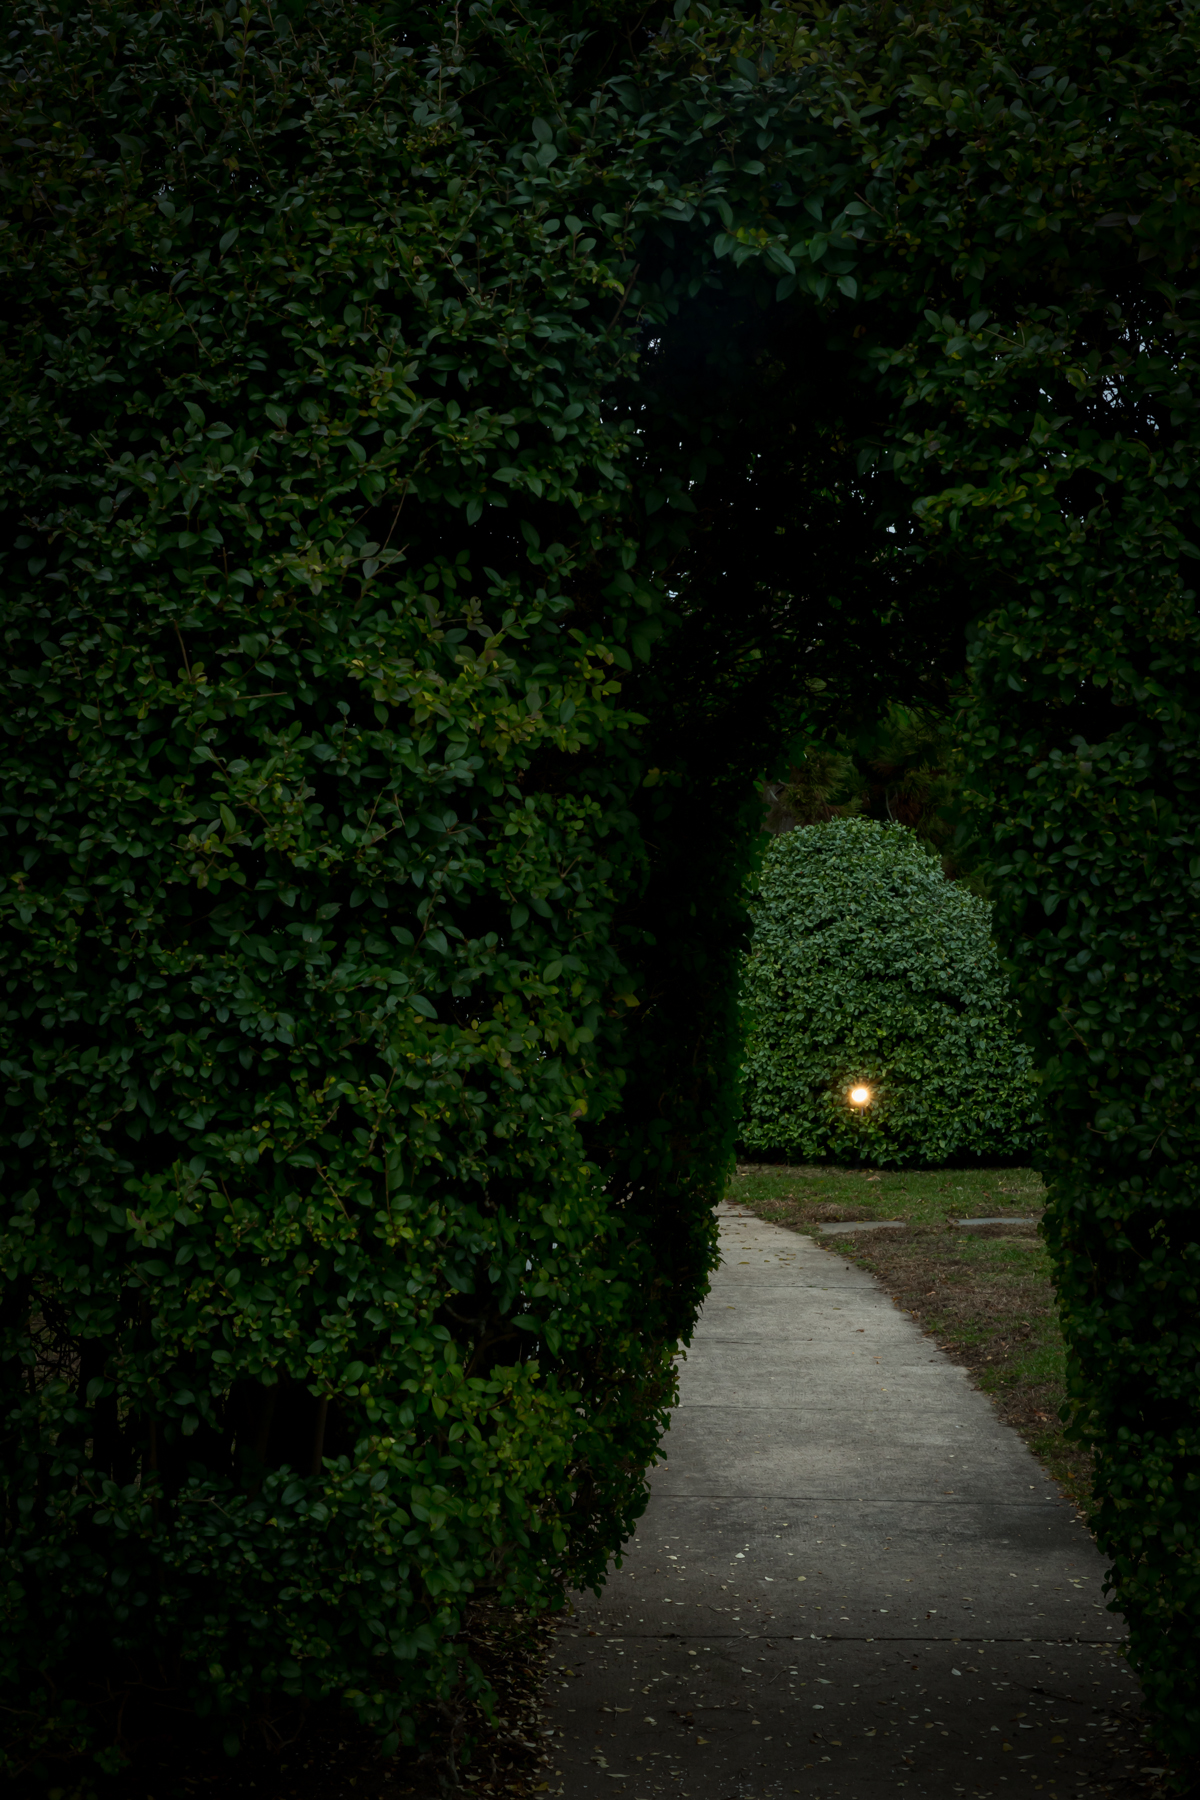 Passage through shrubs